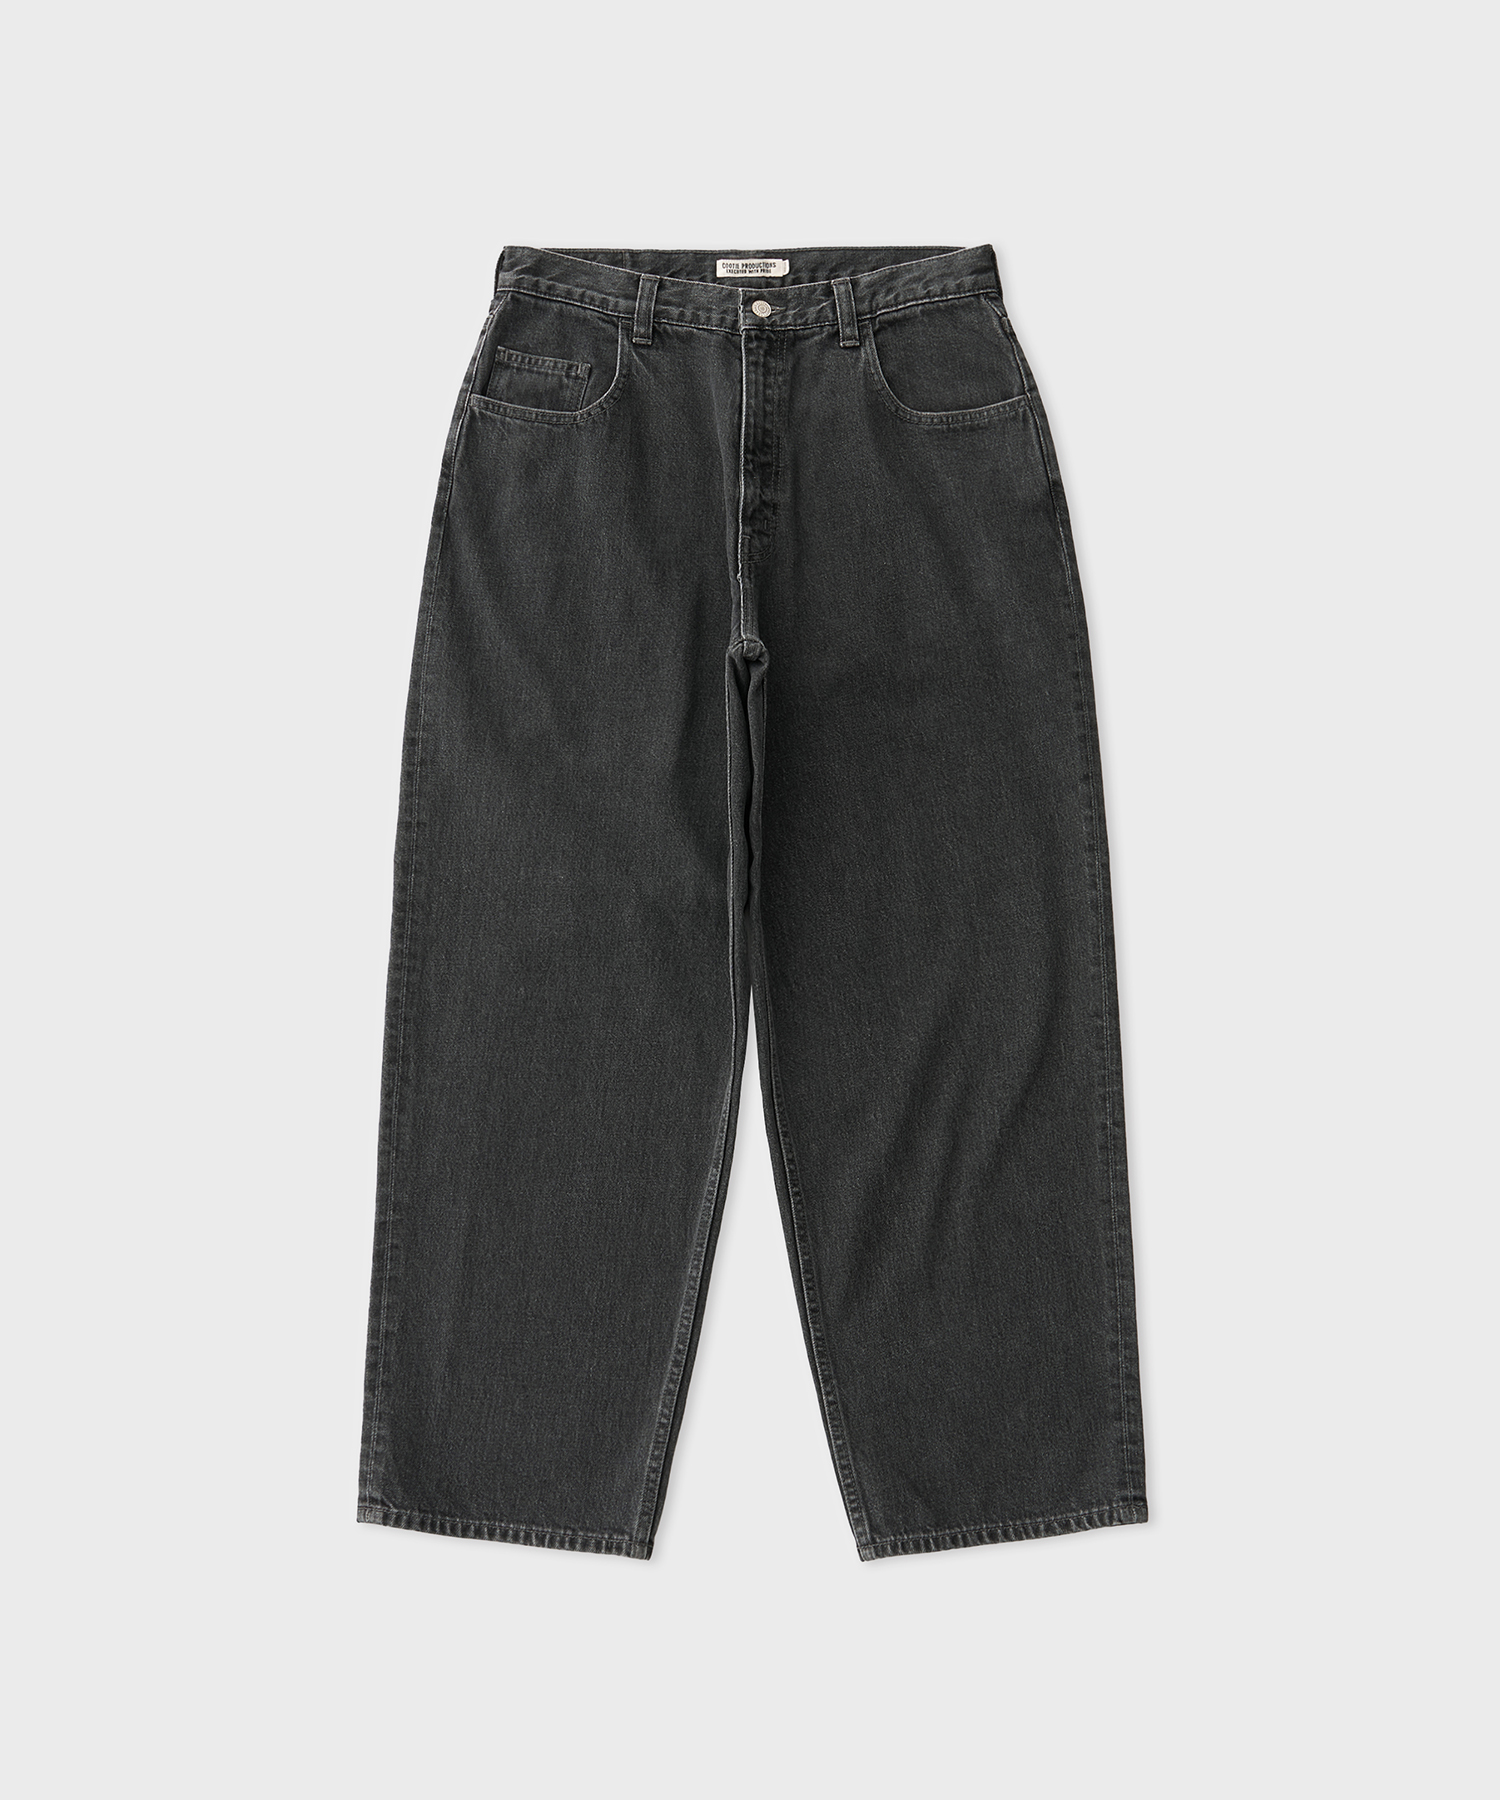 5 Pocket Baggy Denim Pants (Black Fade)